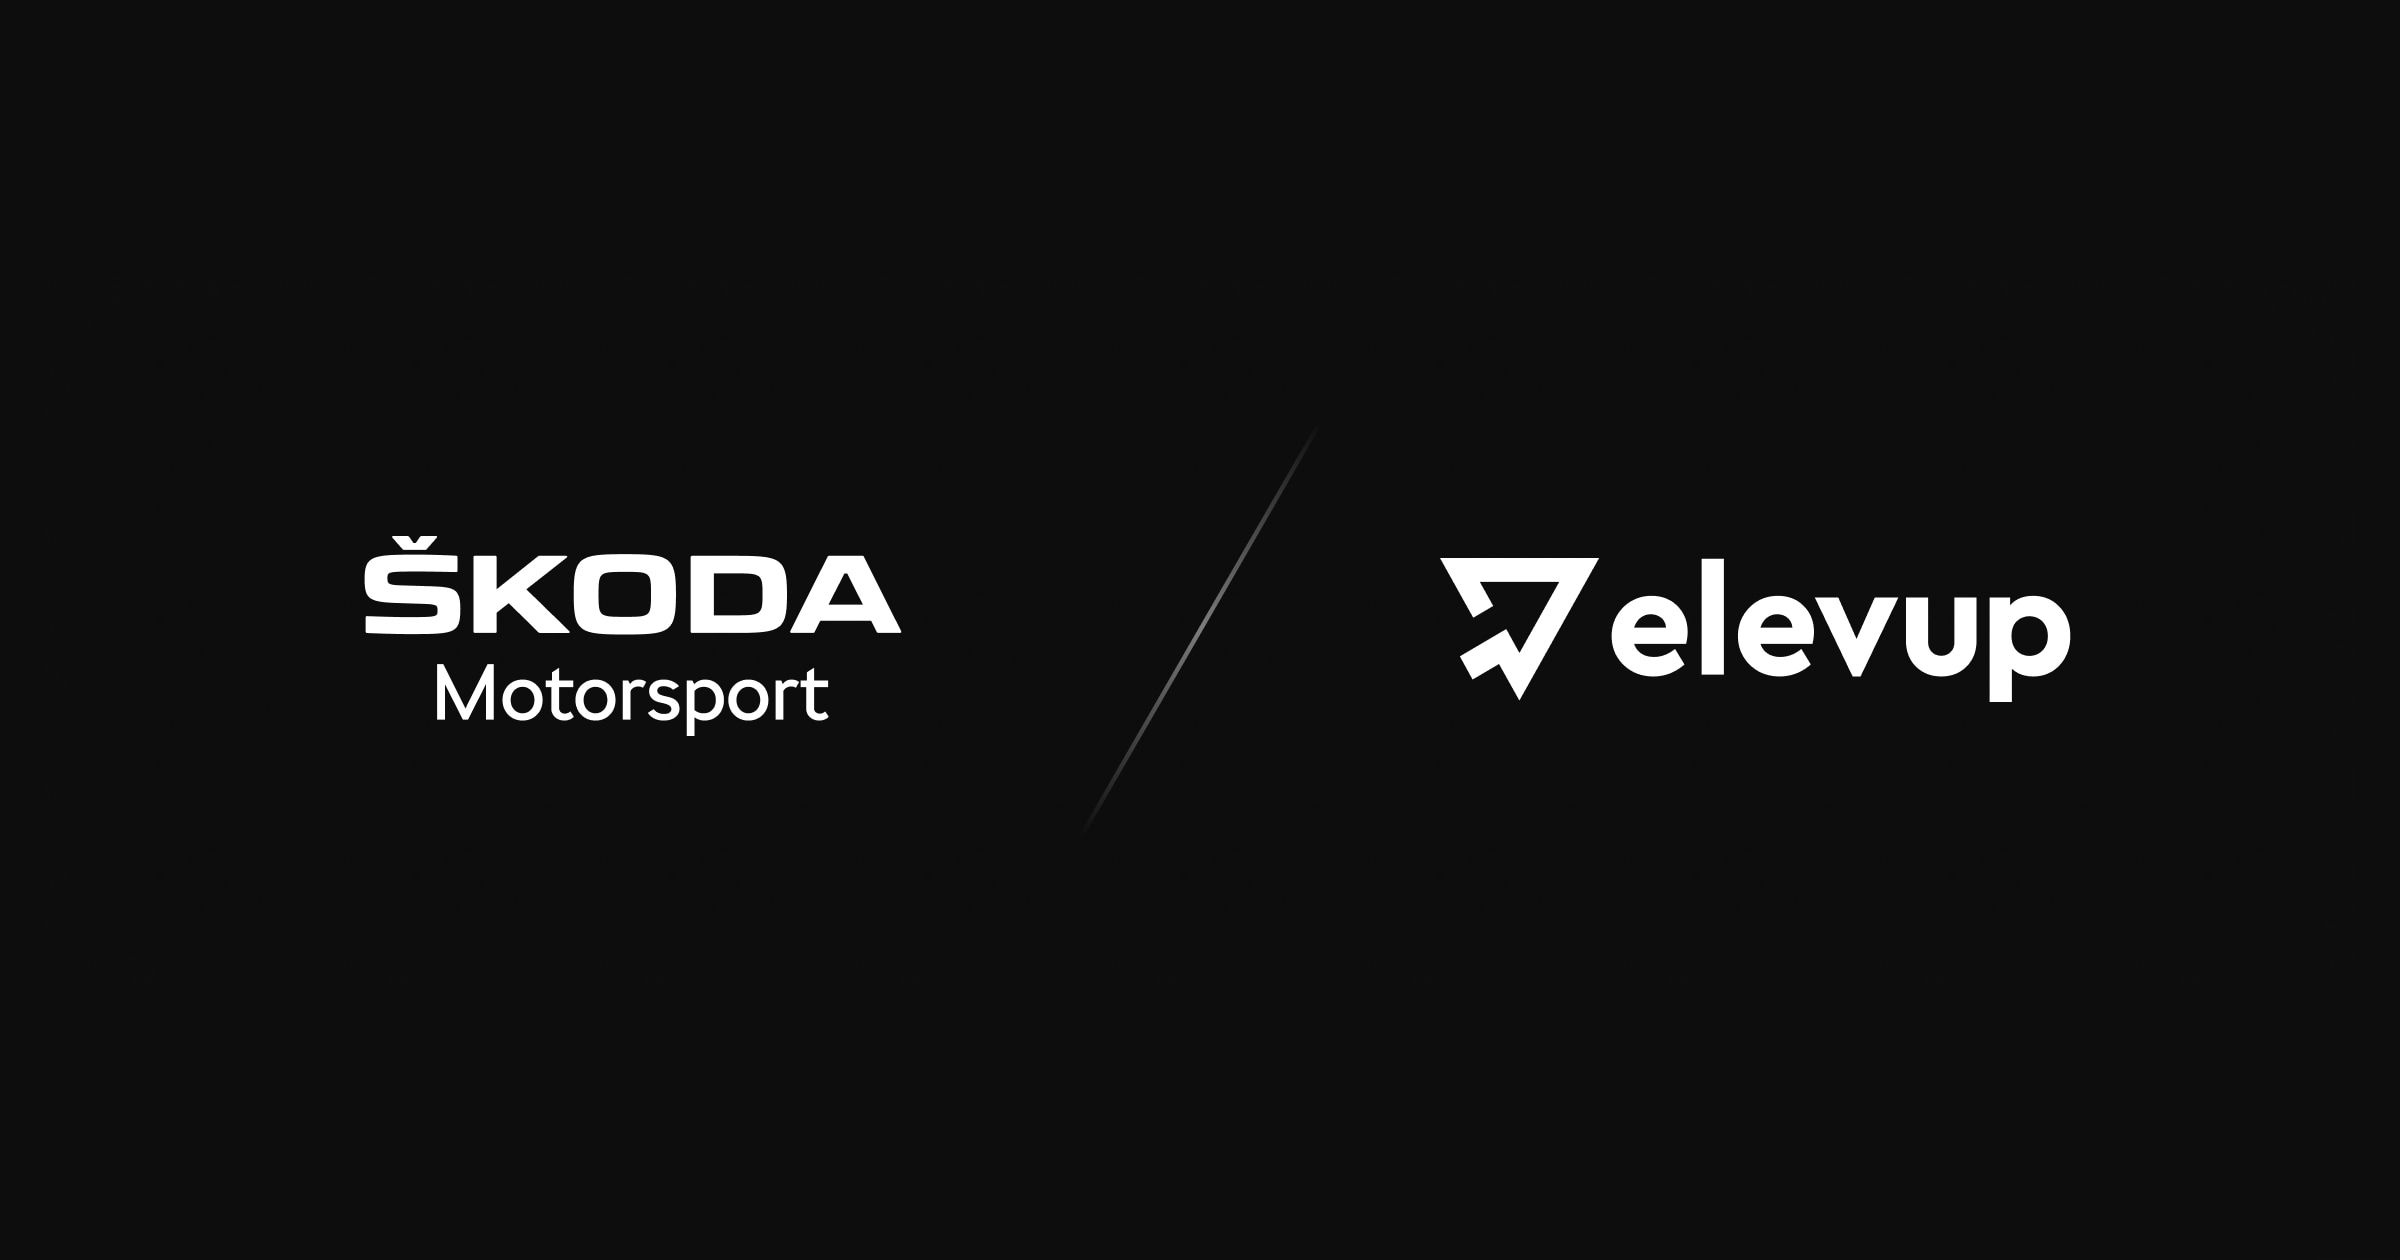 ŠKODA Motorsport hires elevup as their new software provider